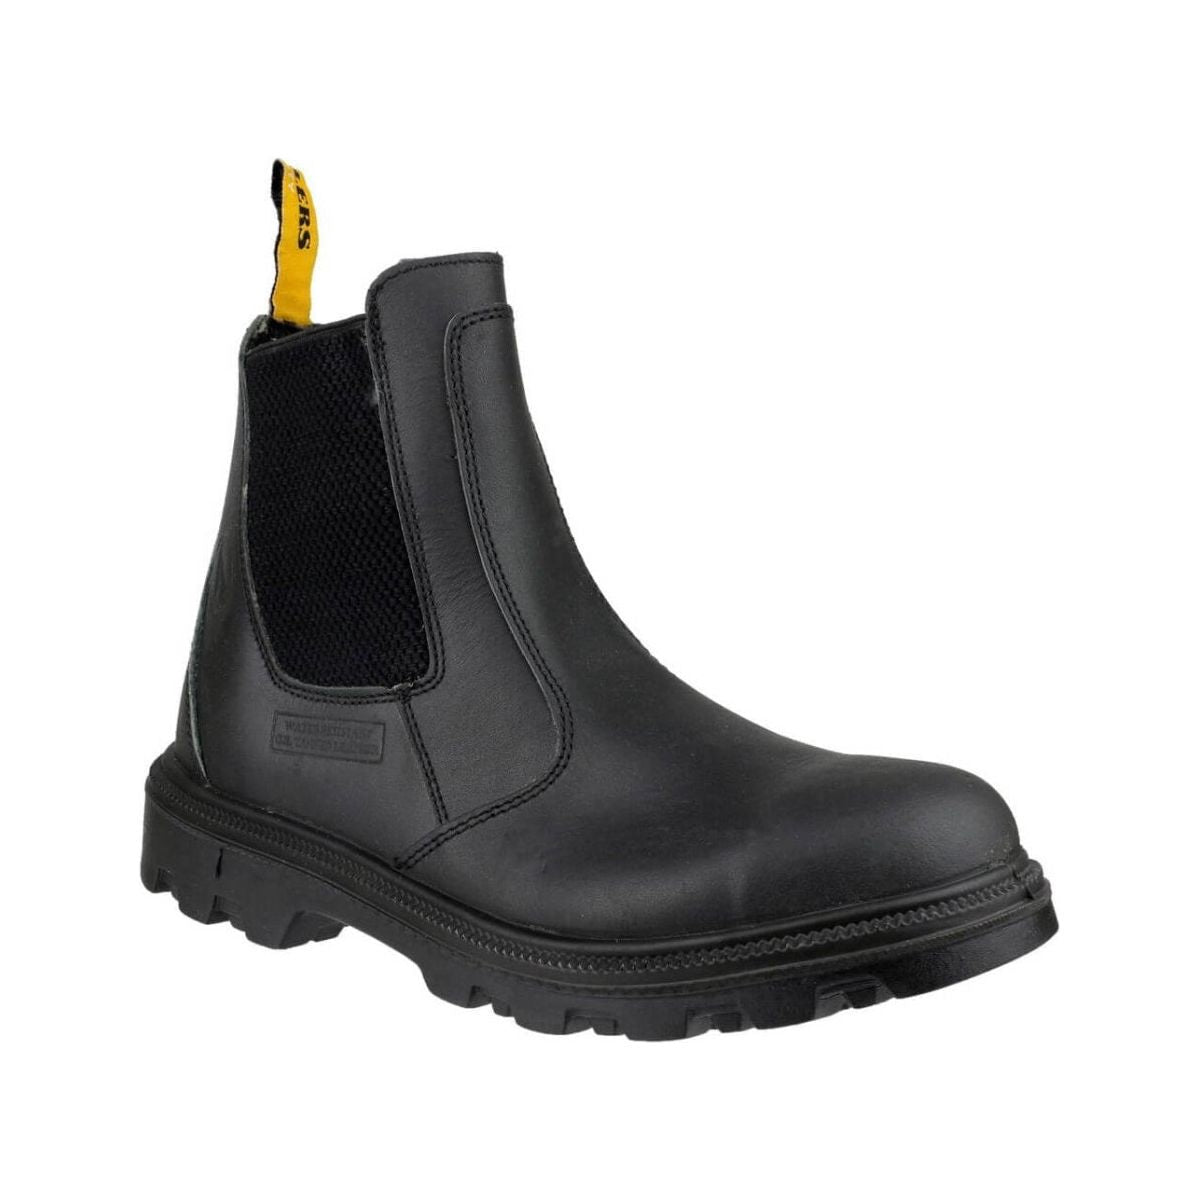 Amblers Fs129 Safety Dealer Boots Mens - workweargurus.com